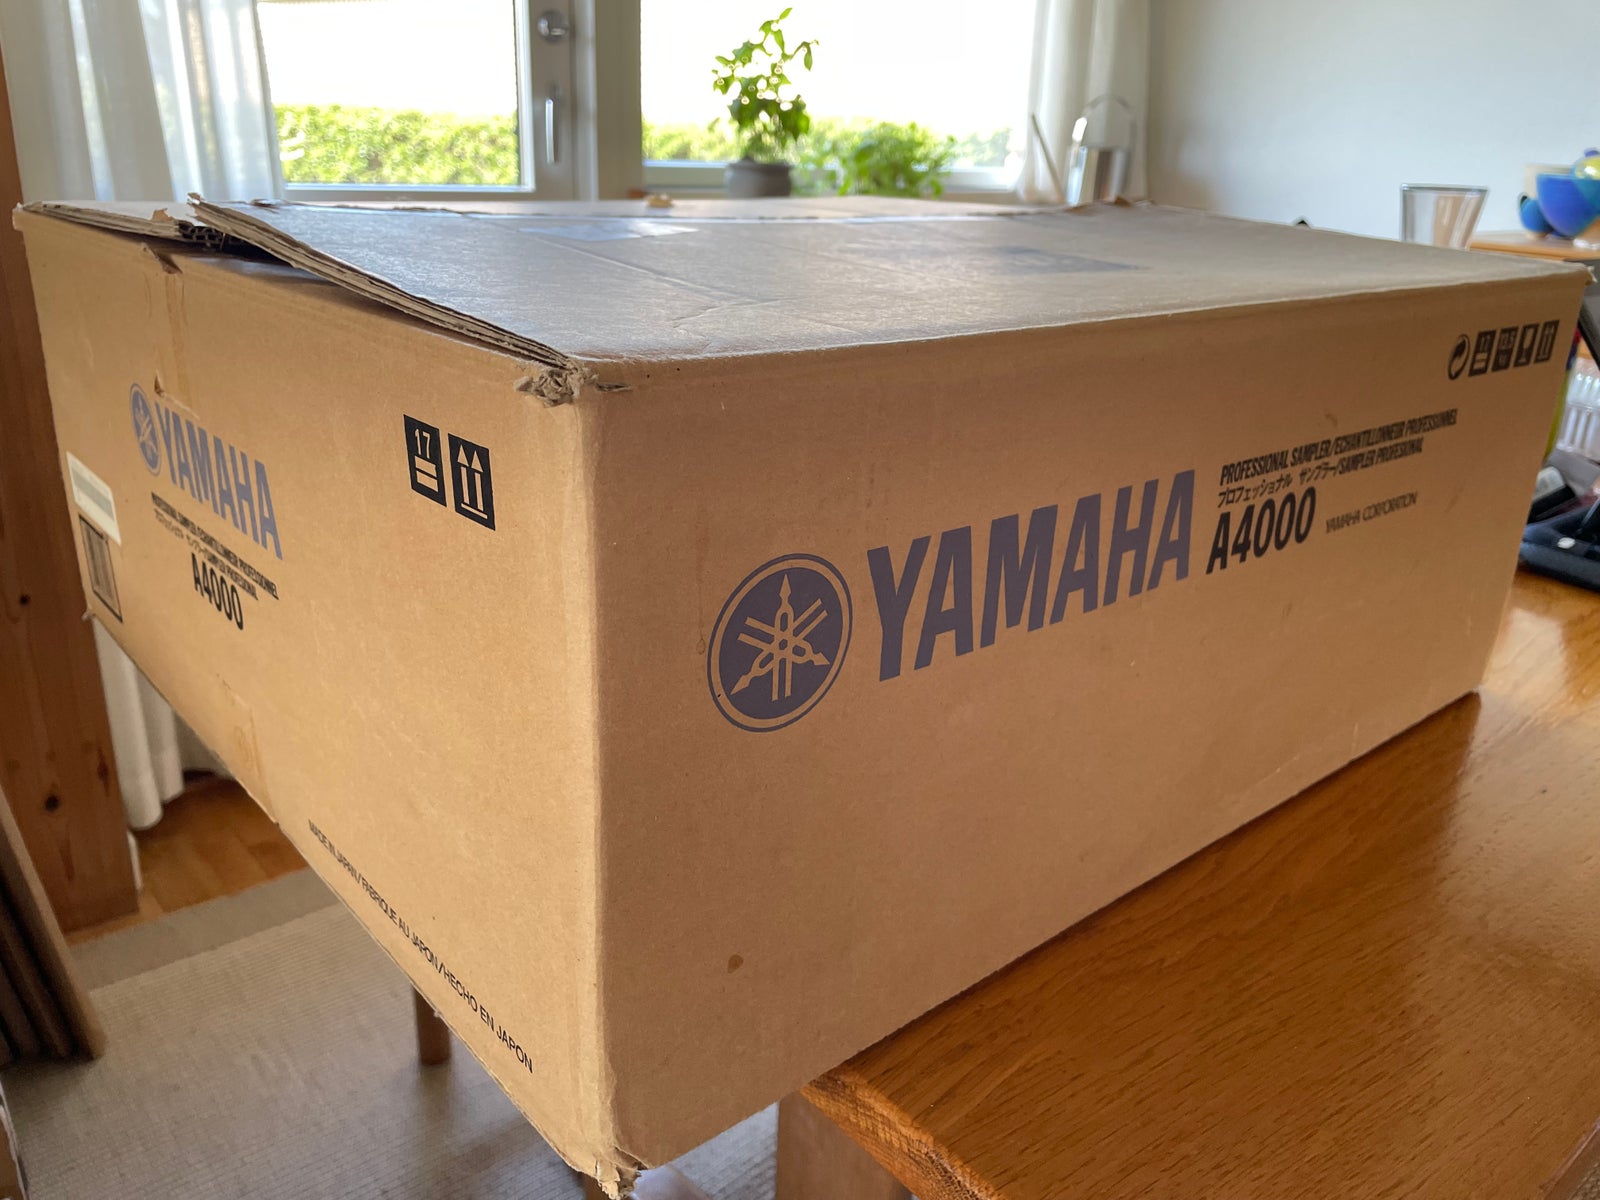 Analog sampler, Yamaha A 4000